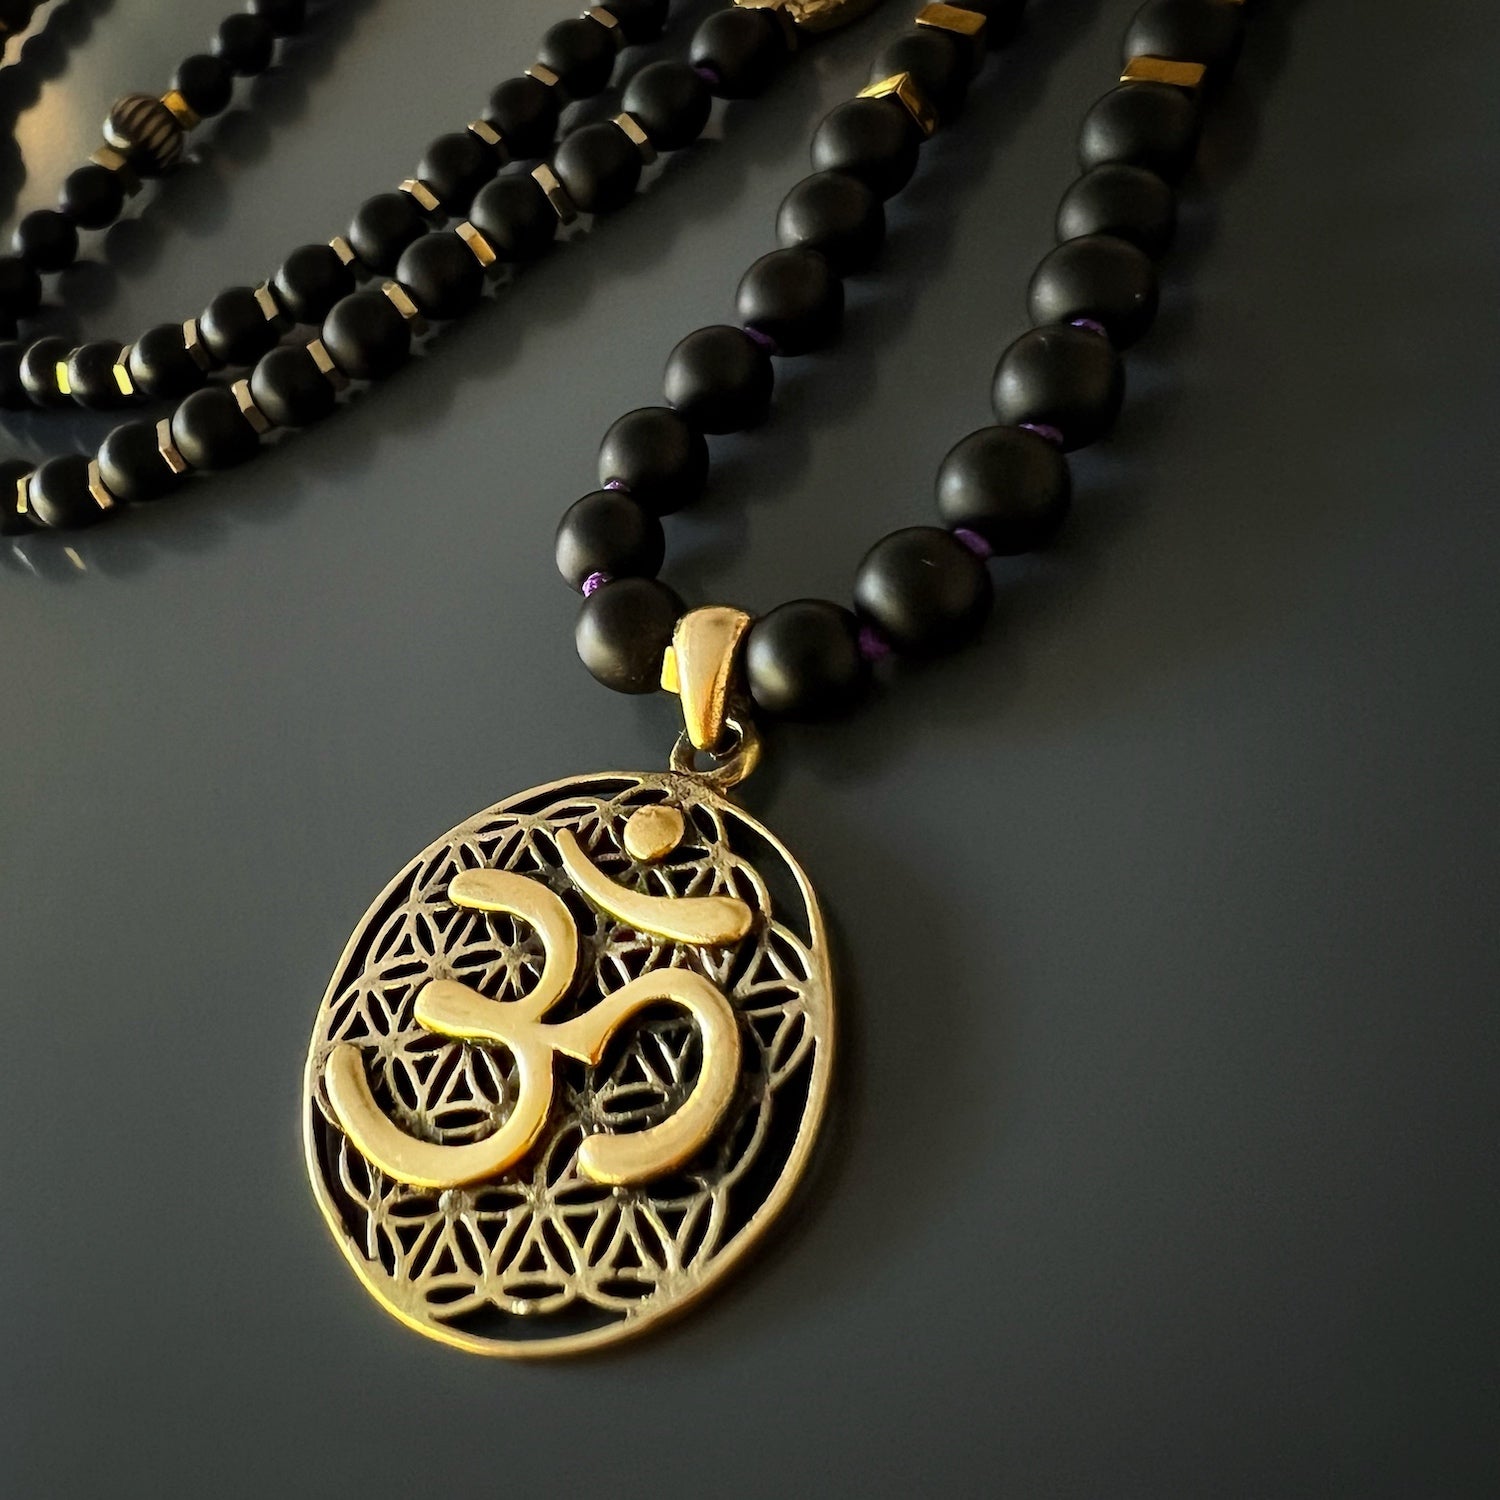 The Spiritual Yoga Mala Onyx Necklace, showcasing its black onyx stone beads